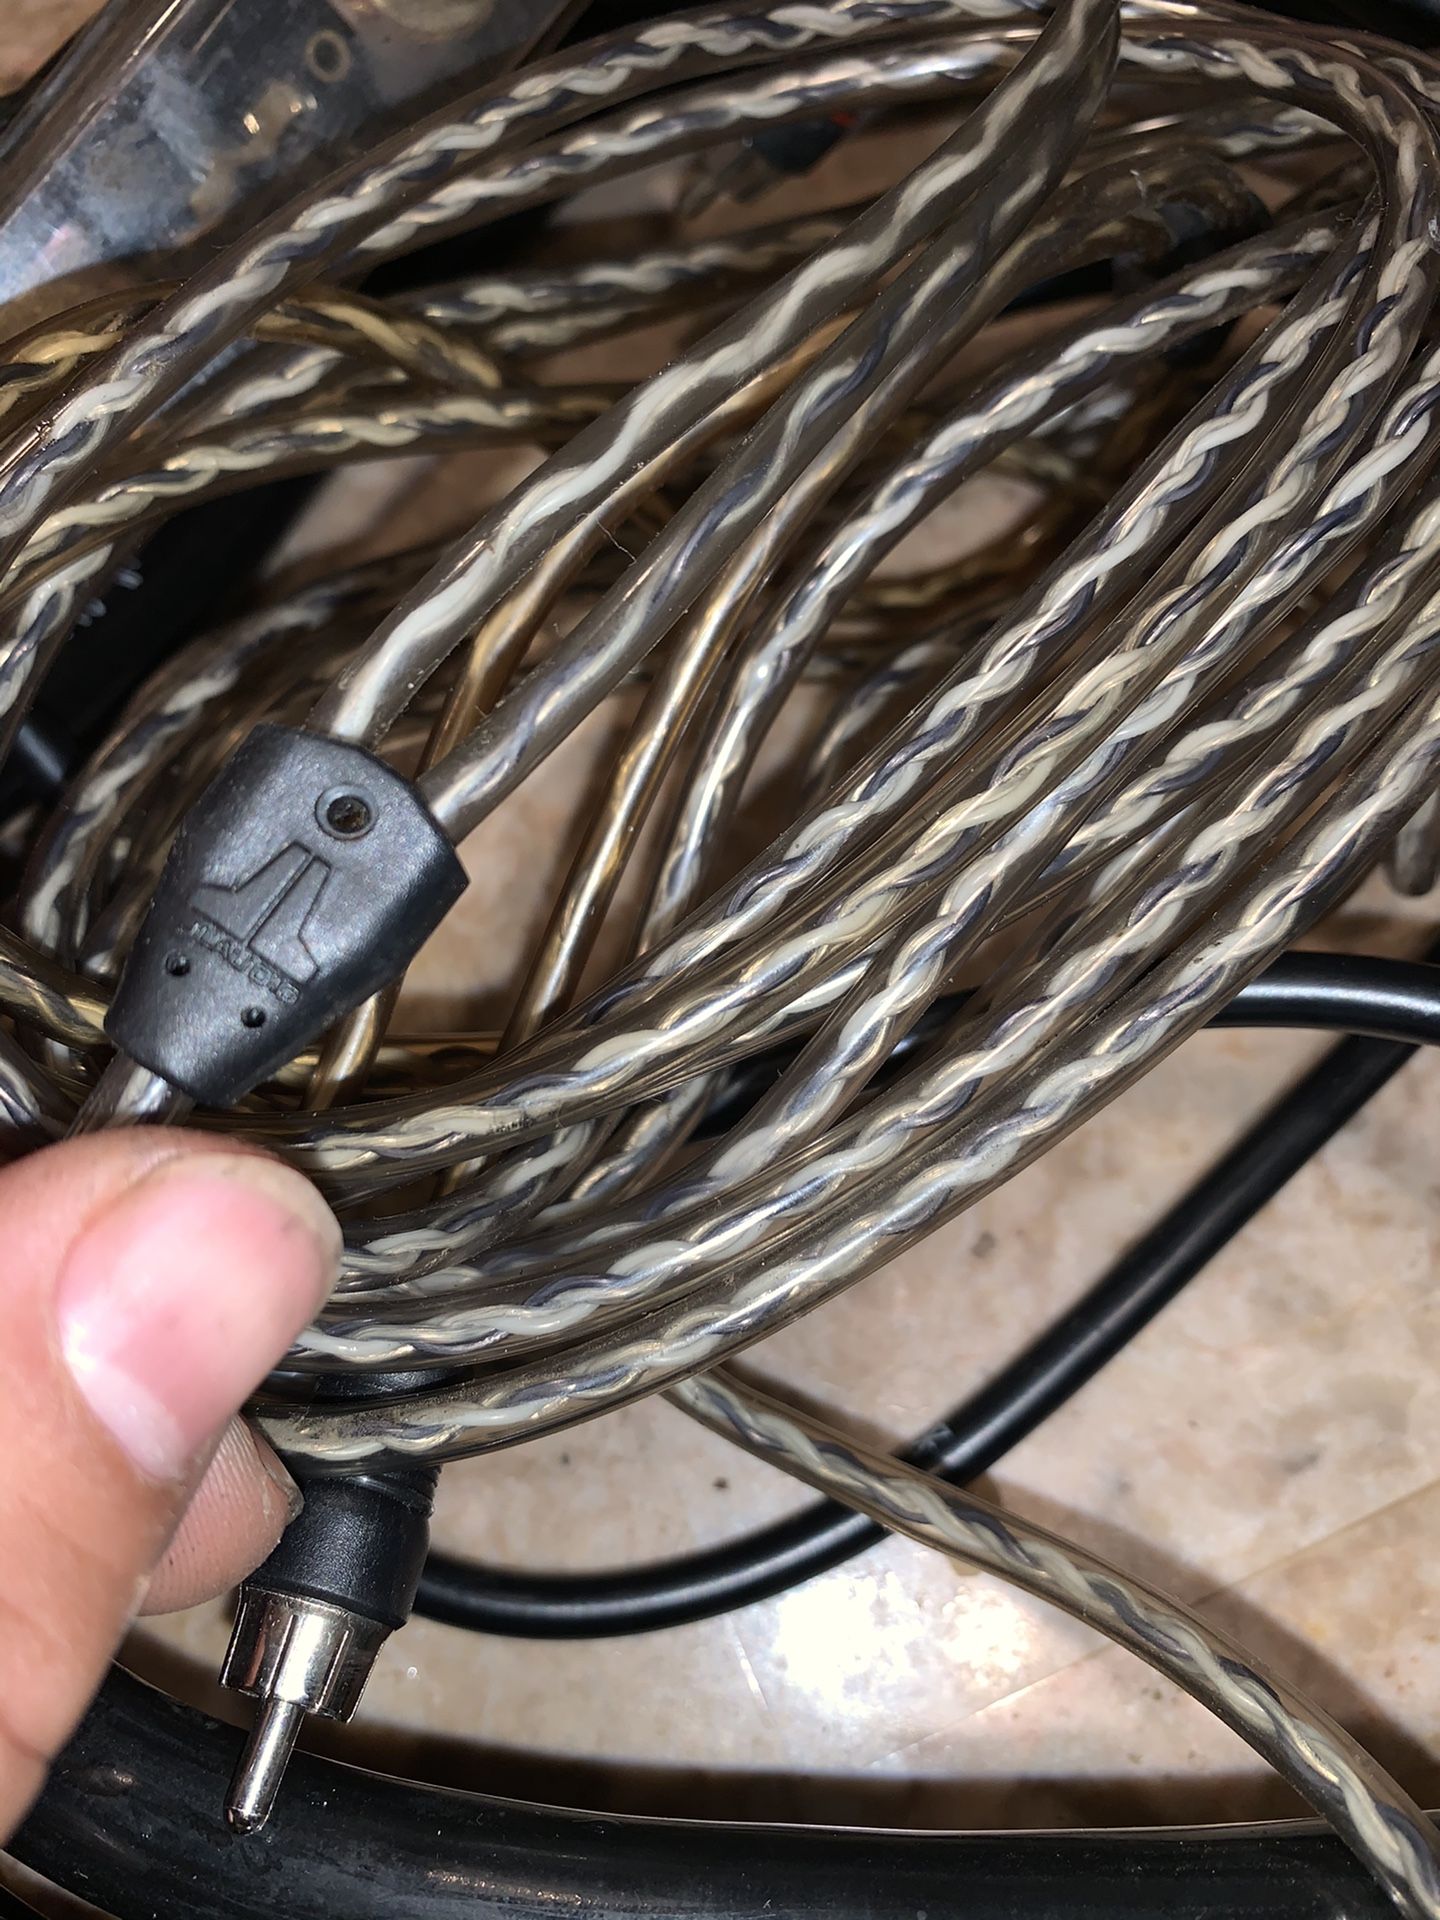 Jl audio amp kit wire